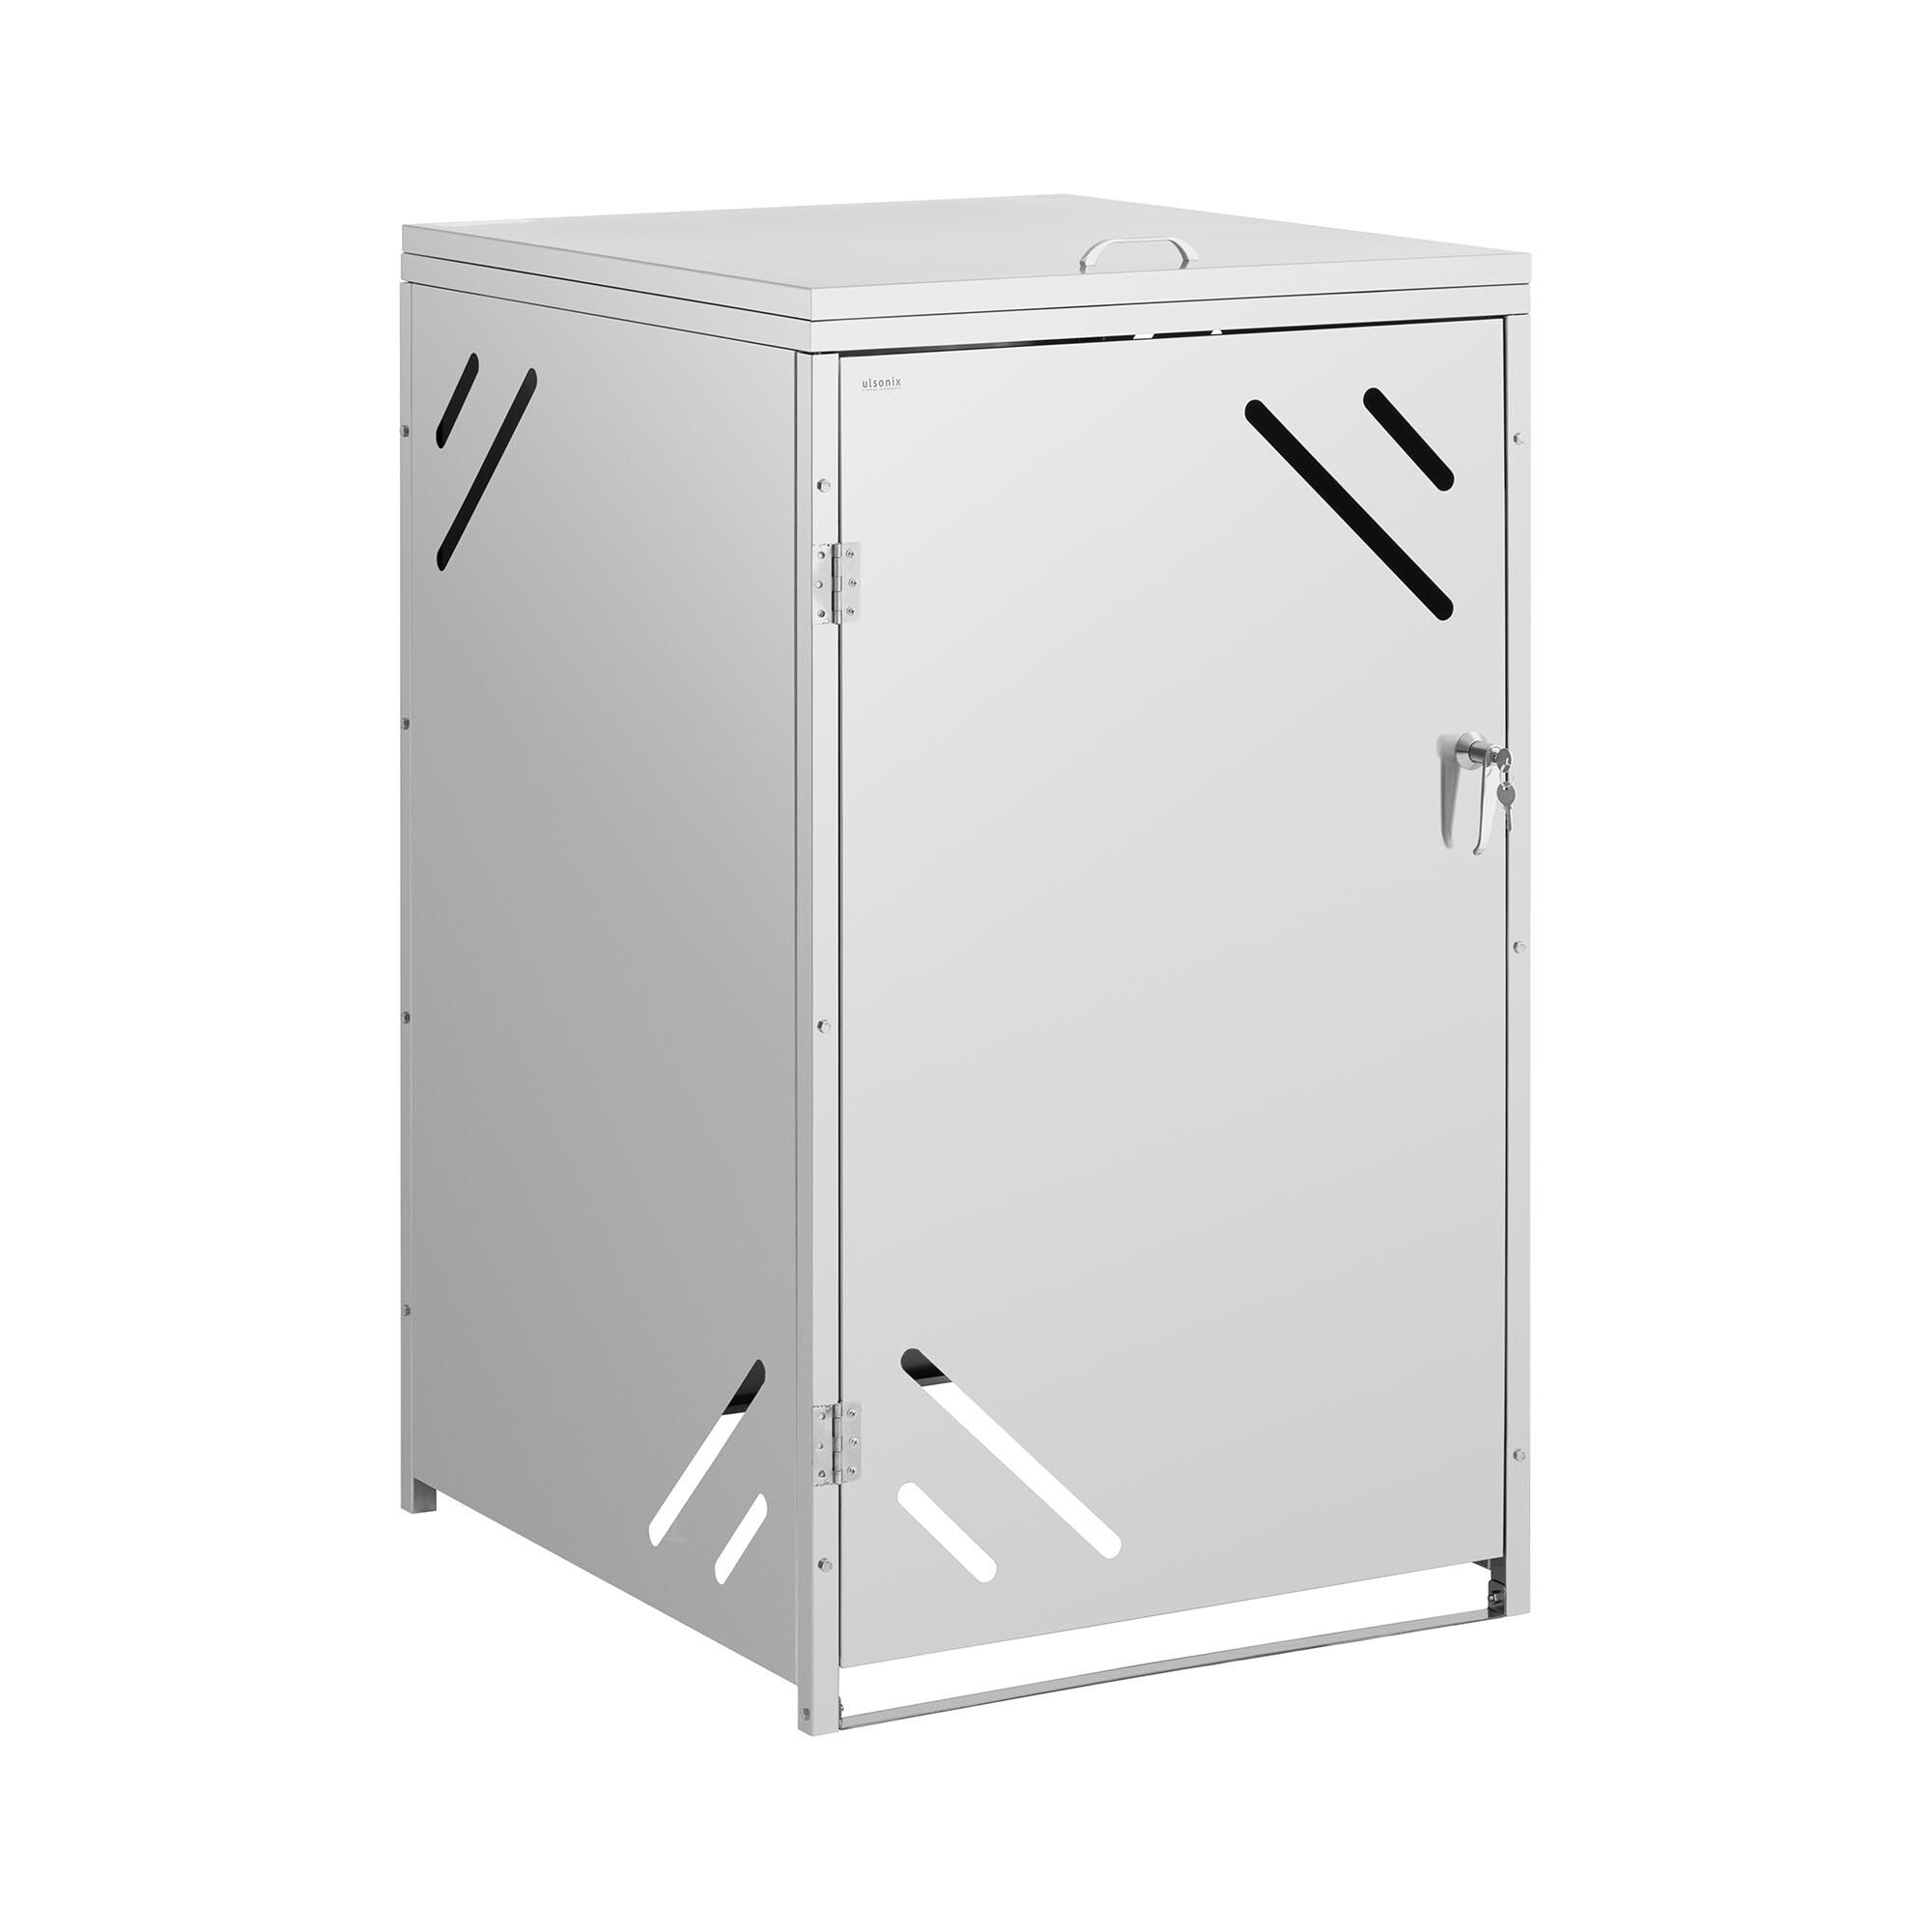 ulsonix Bin Storage Box - 240 L - diagonal air slots